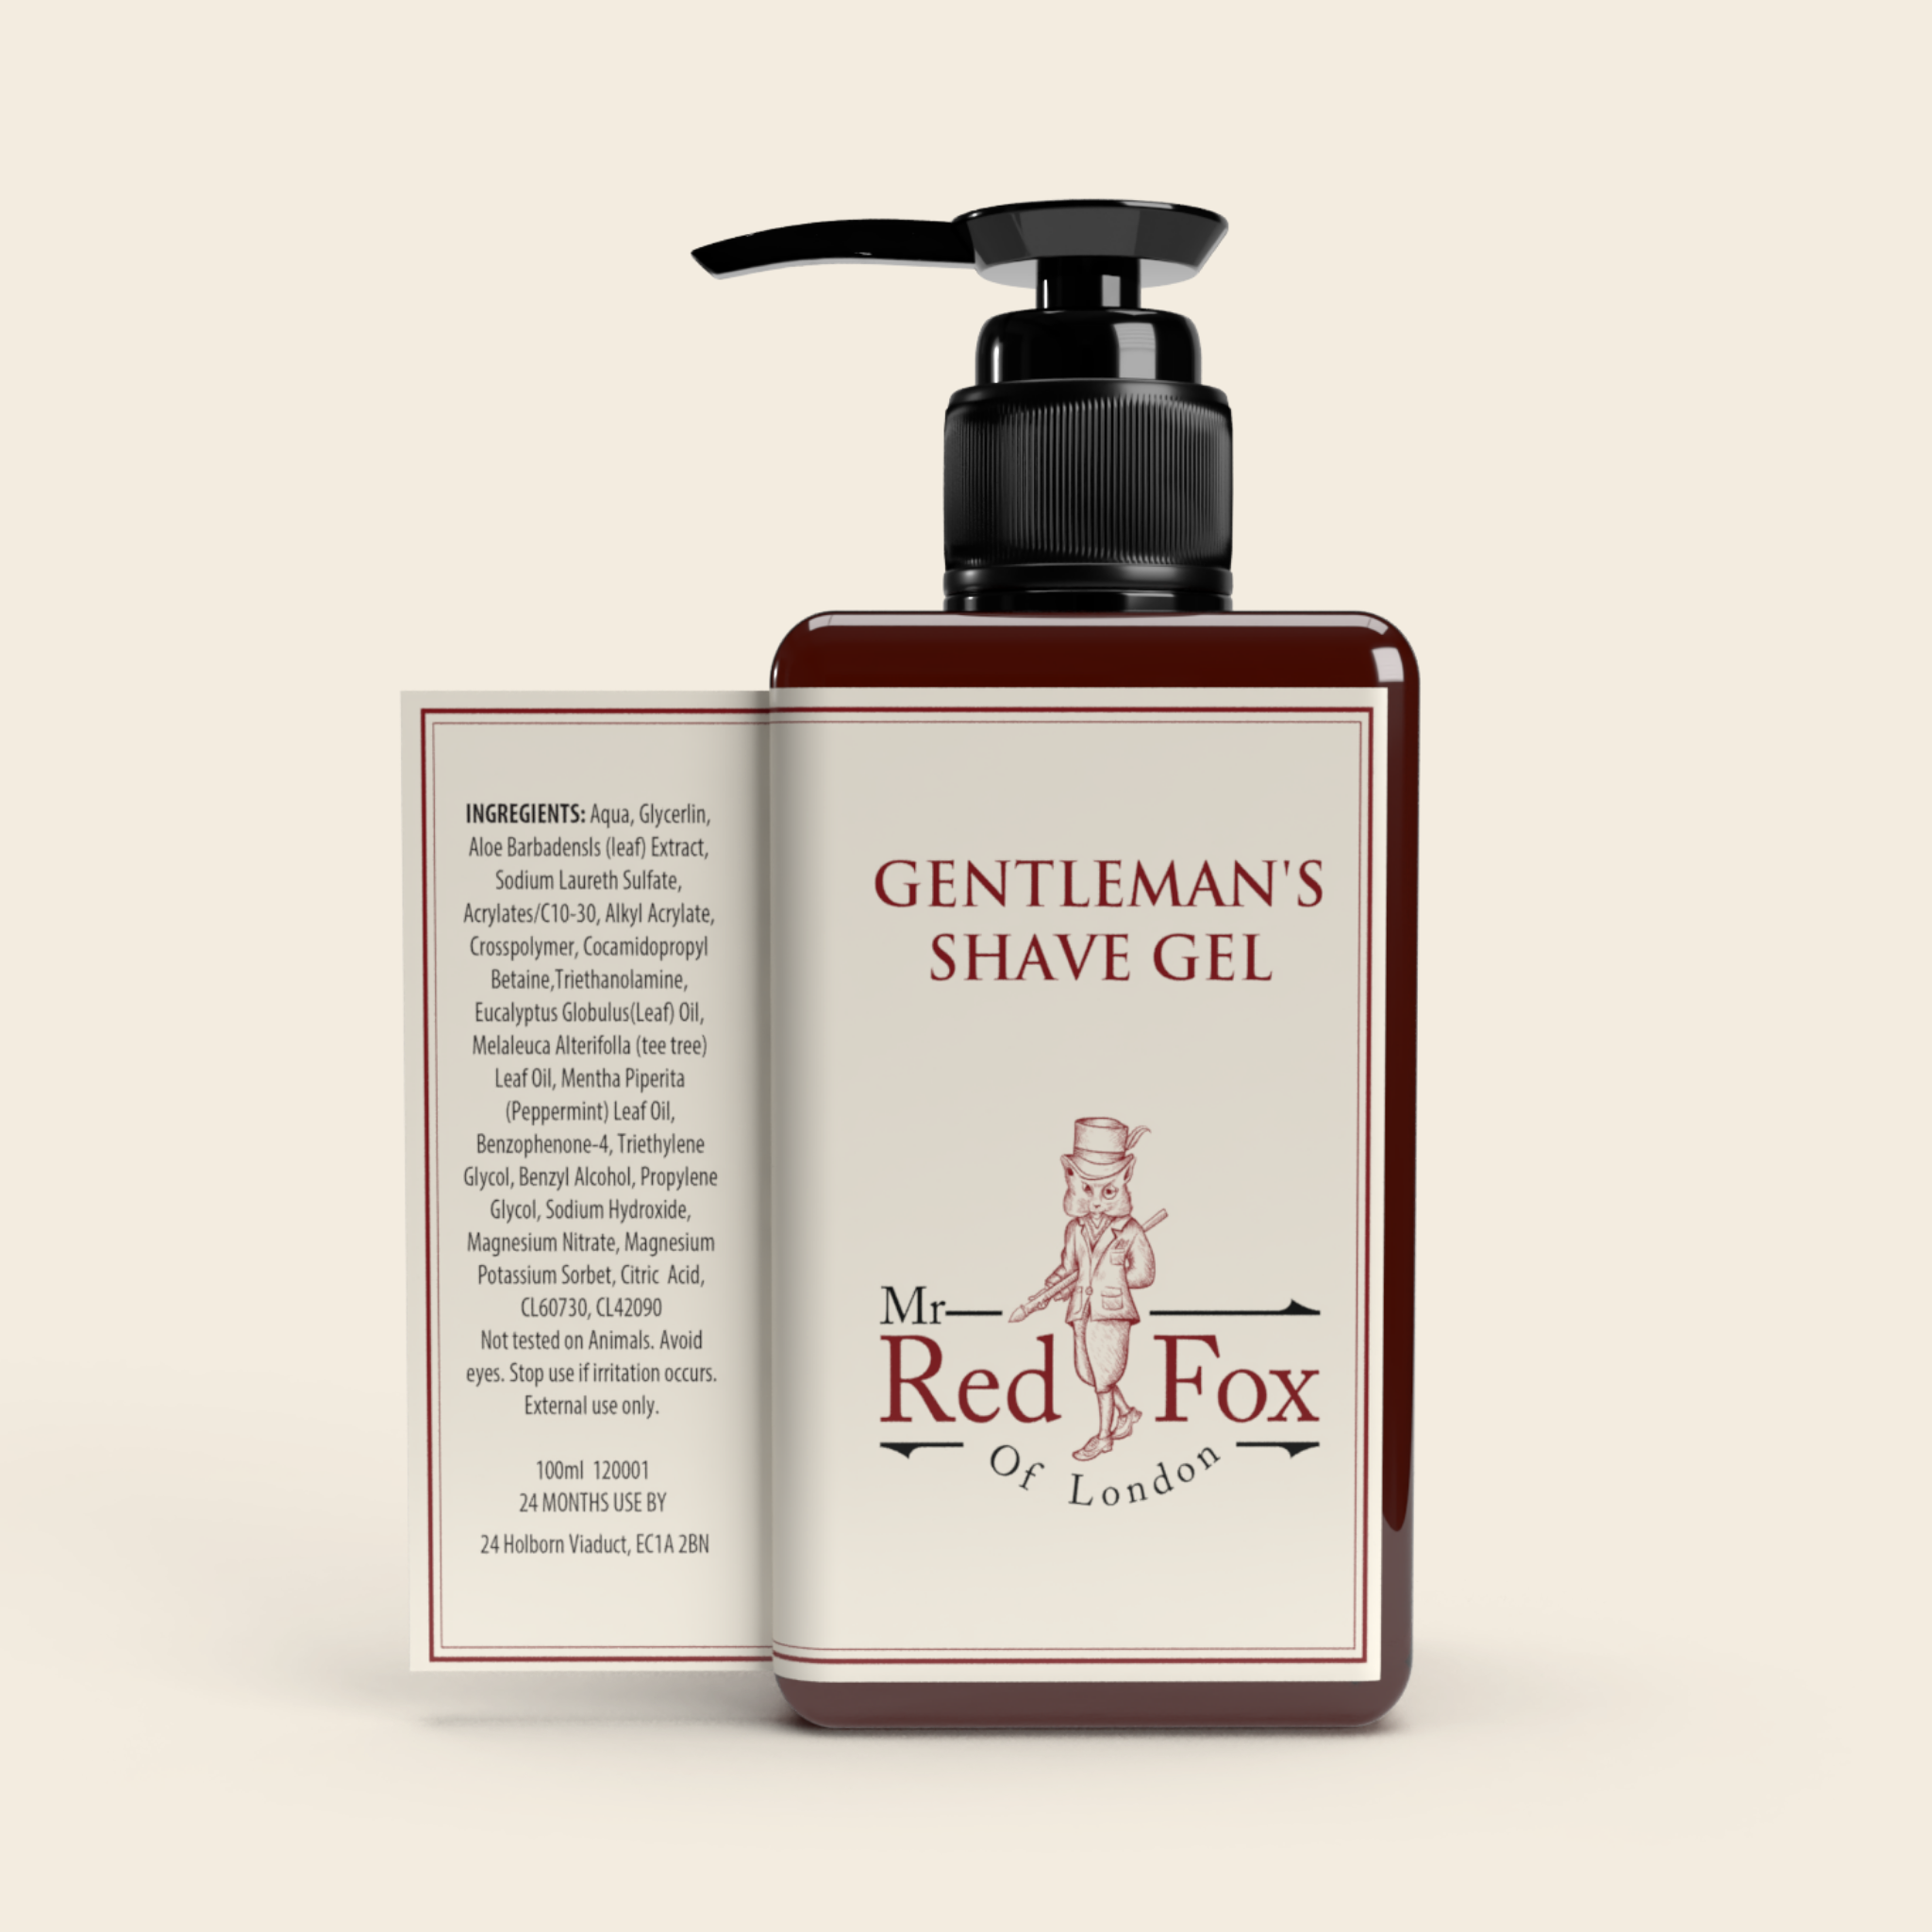 Gentleman's Shave Gel - Mr Red Fox Of London